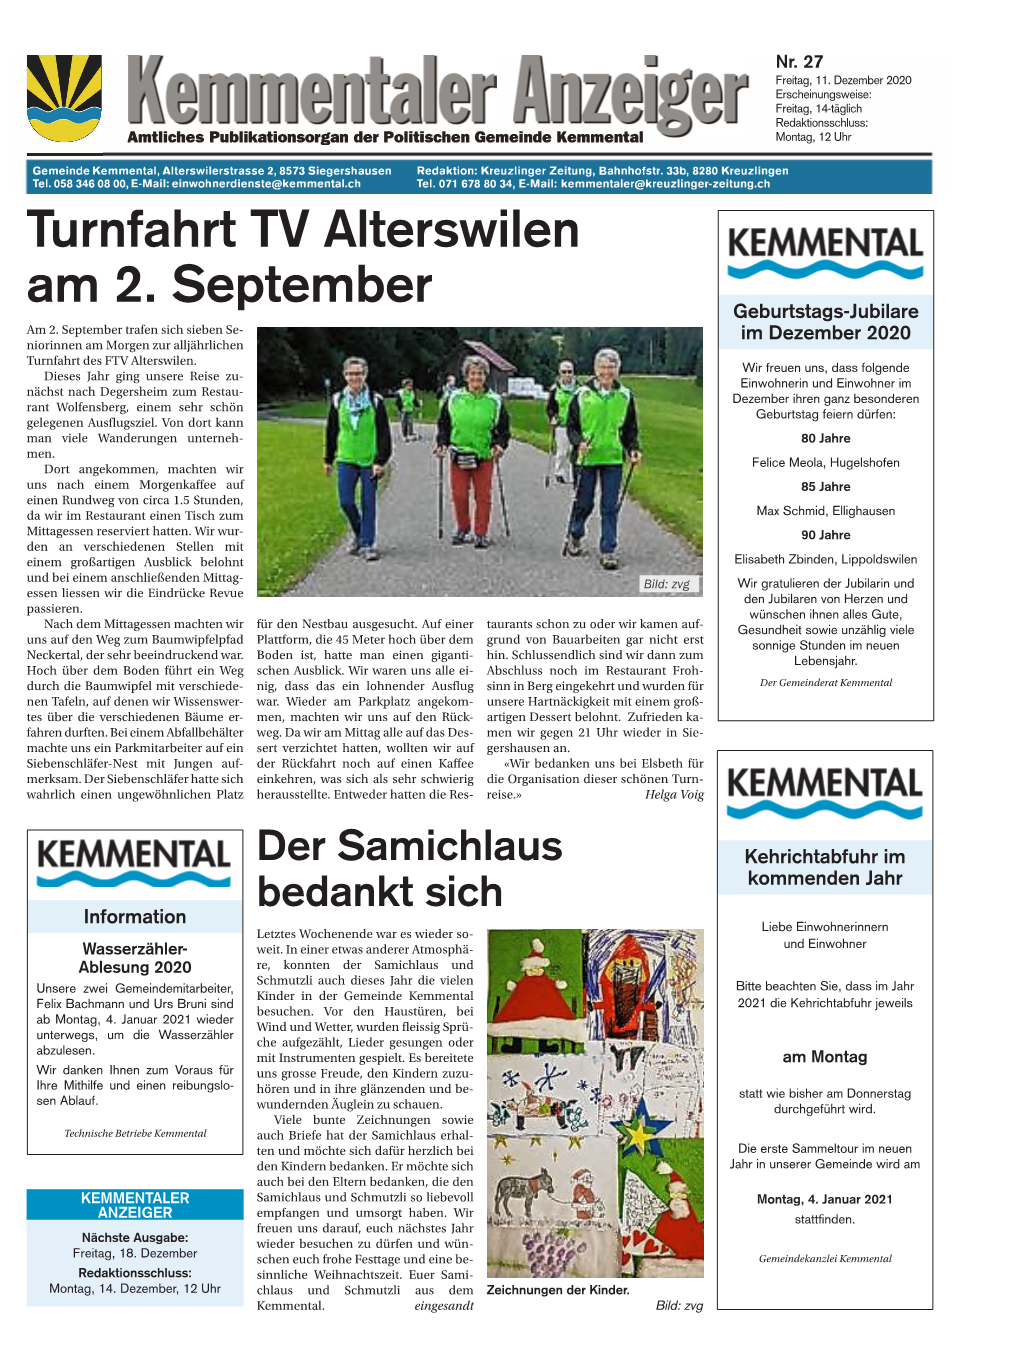 Turnfahrt TV Alterswilen Am 2. September Geburtstags-Jubilare Am 2